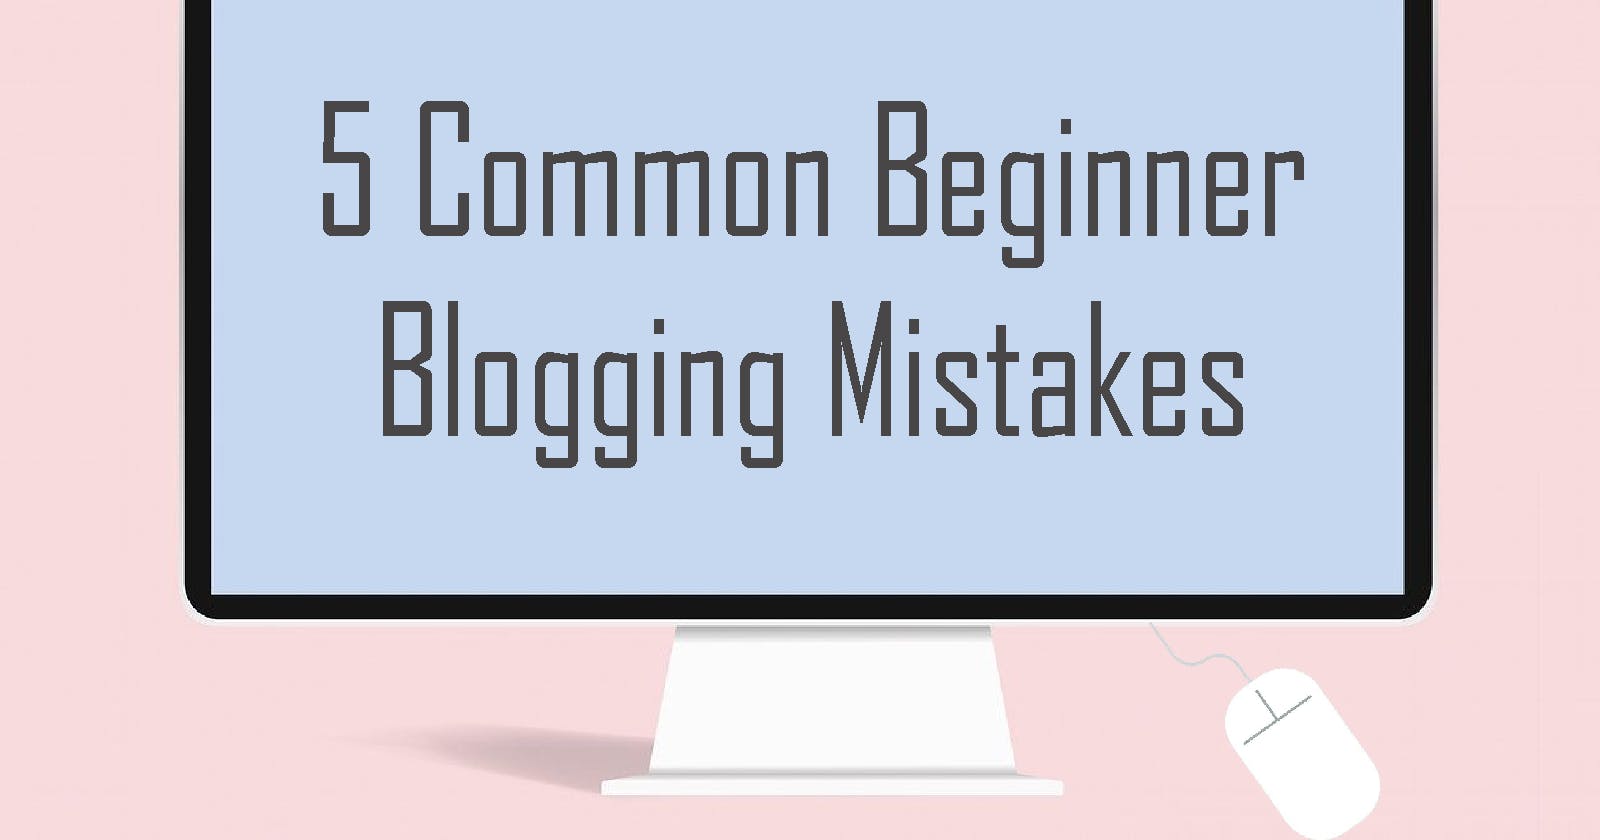 5 Common Beginner Blogging Mistakes